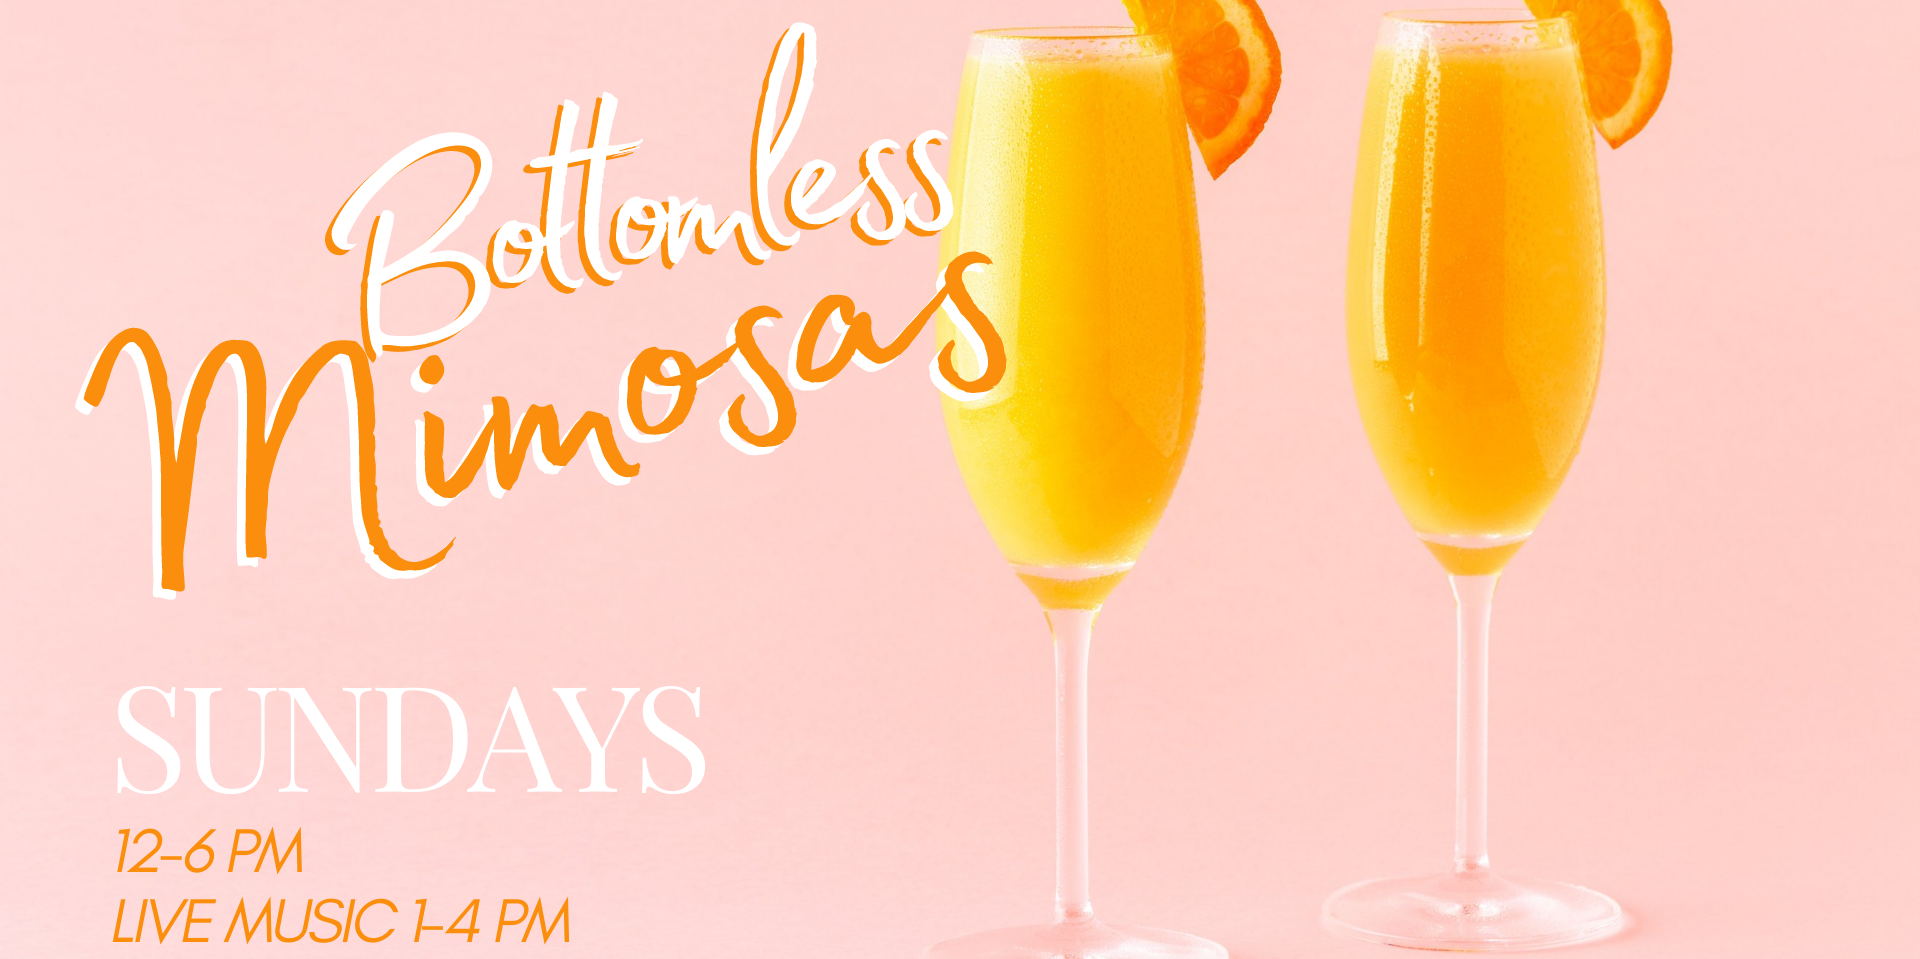 Mimosa Sunday – Caterpillar Wine Glasses- $10 Bottomless